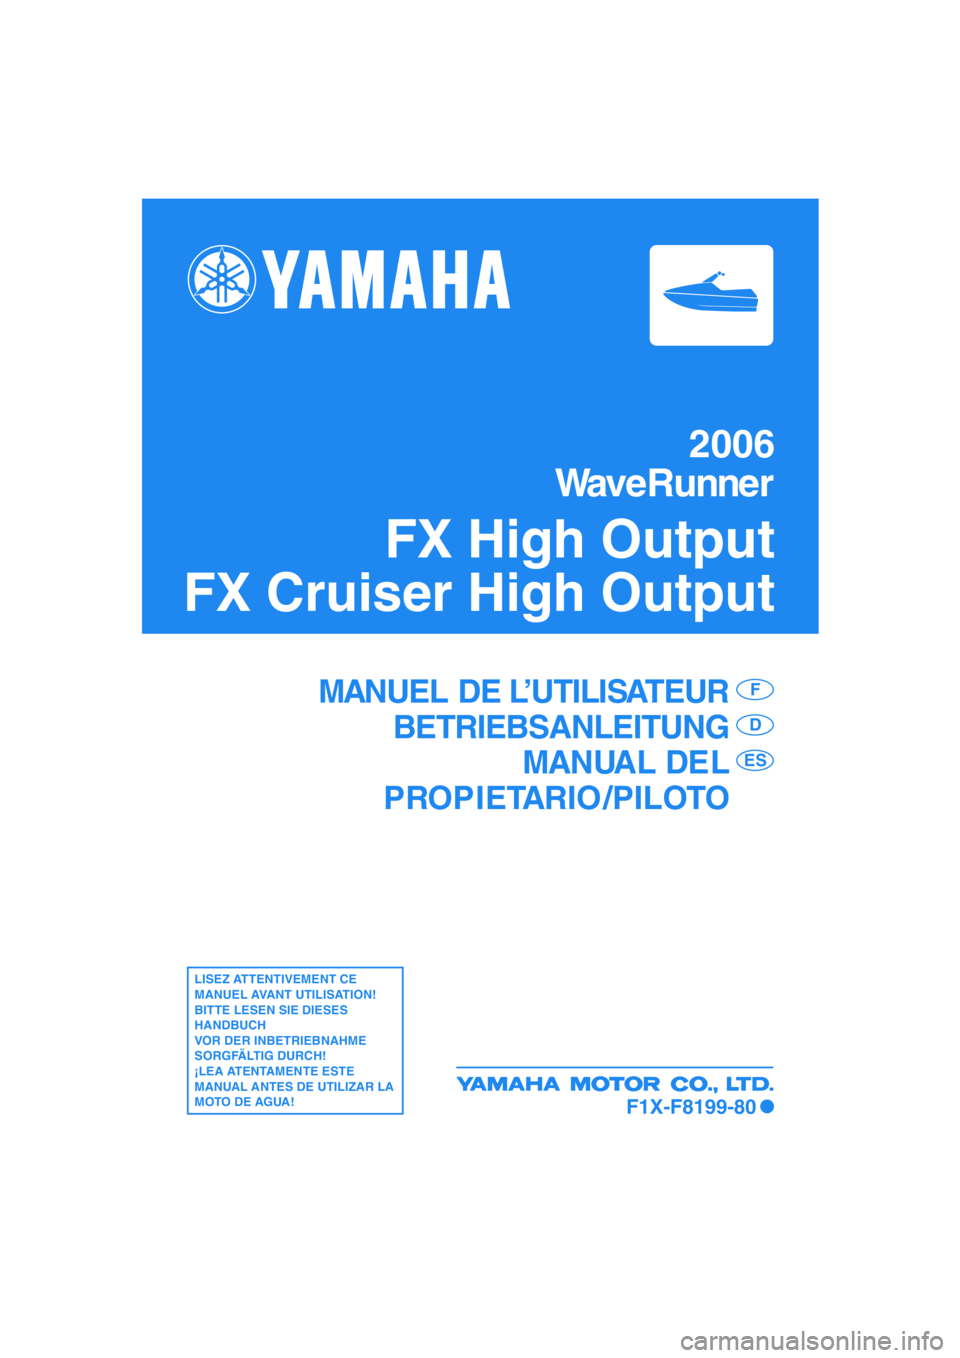 YAMAHA FX HO CRUISER 2006  Notices Demploi (in French) 2006
WaveRunner
FX High Output
FX Cruiser High Output
MANUEL DE L’UTILISATEUR
BETRIEBSANLEITUNG
MANUAL DEL
PROPIETARIO /PILOTOF
D
ES
LISEZ ATTENTIVEMENT CE 
MANUEL AVANT UTILISATION!
BITTE LESEN SIE